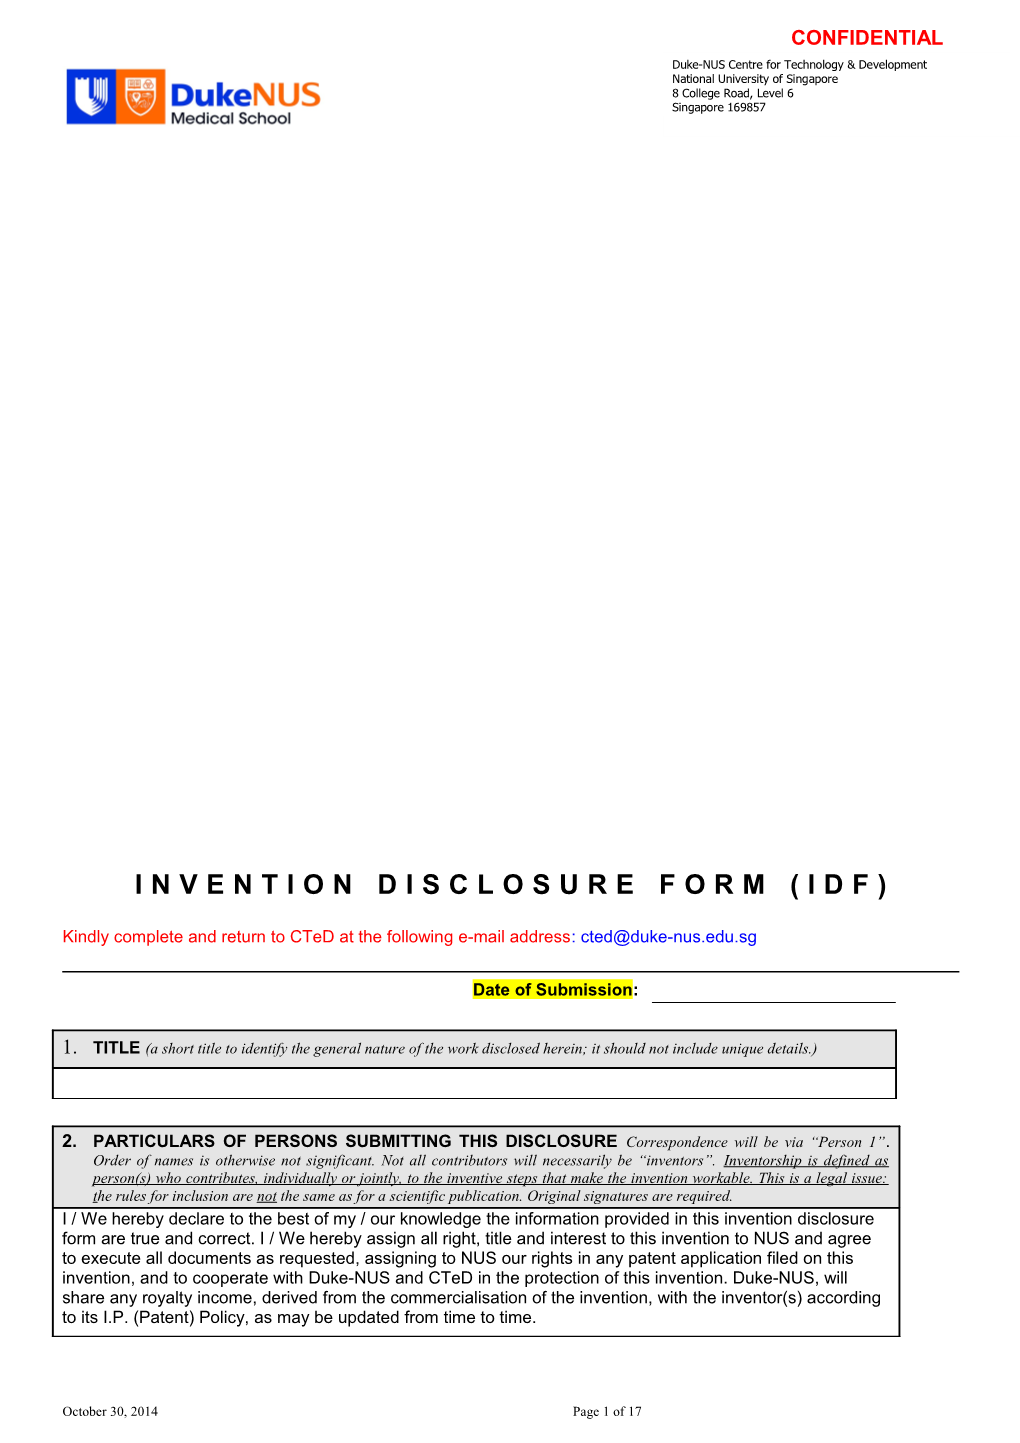 Invention Disclosure Form- Background Information